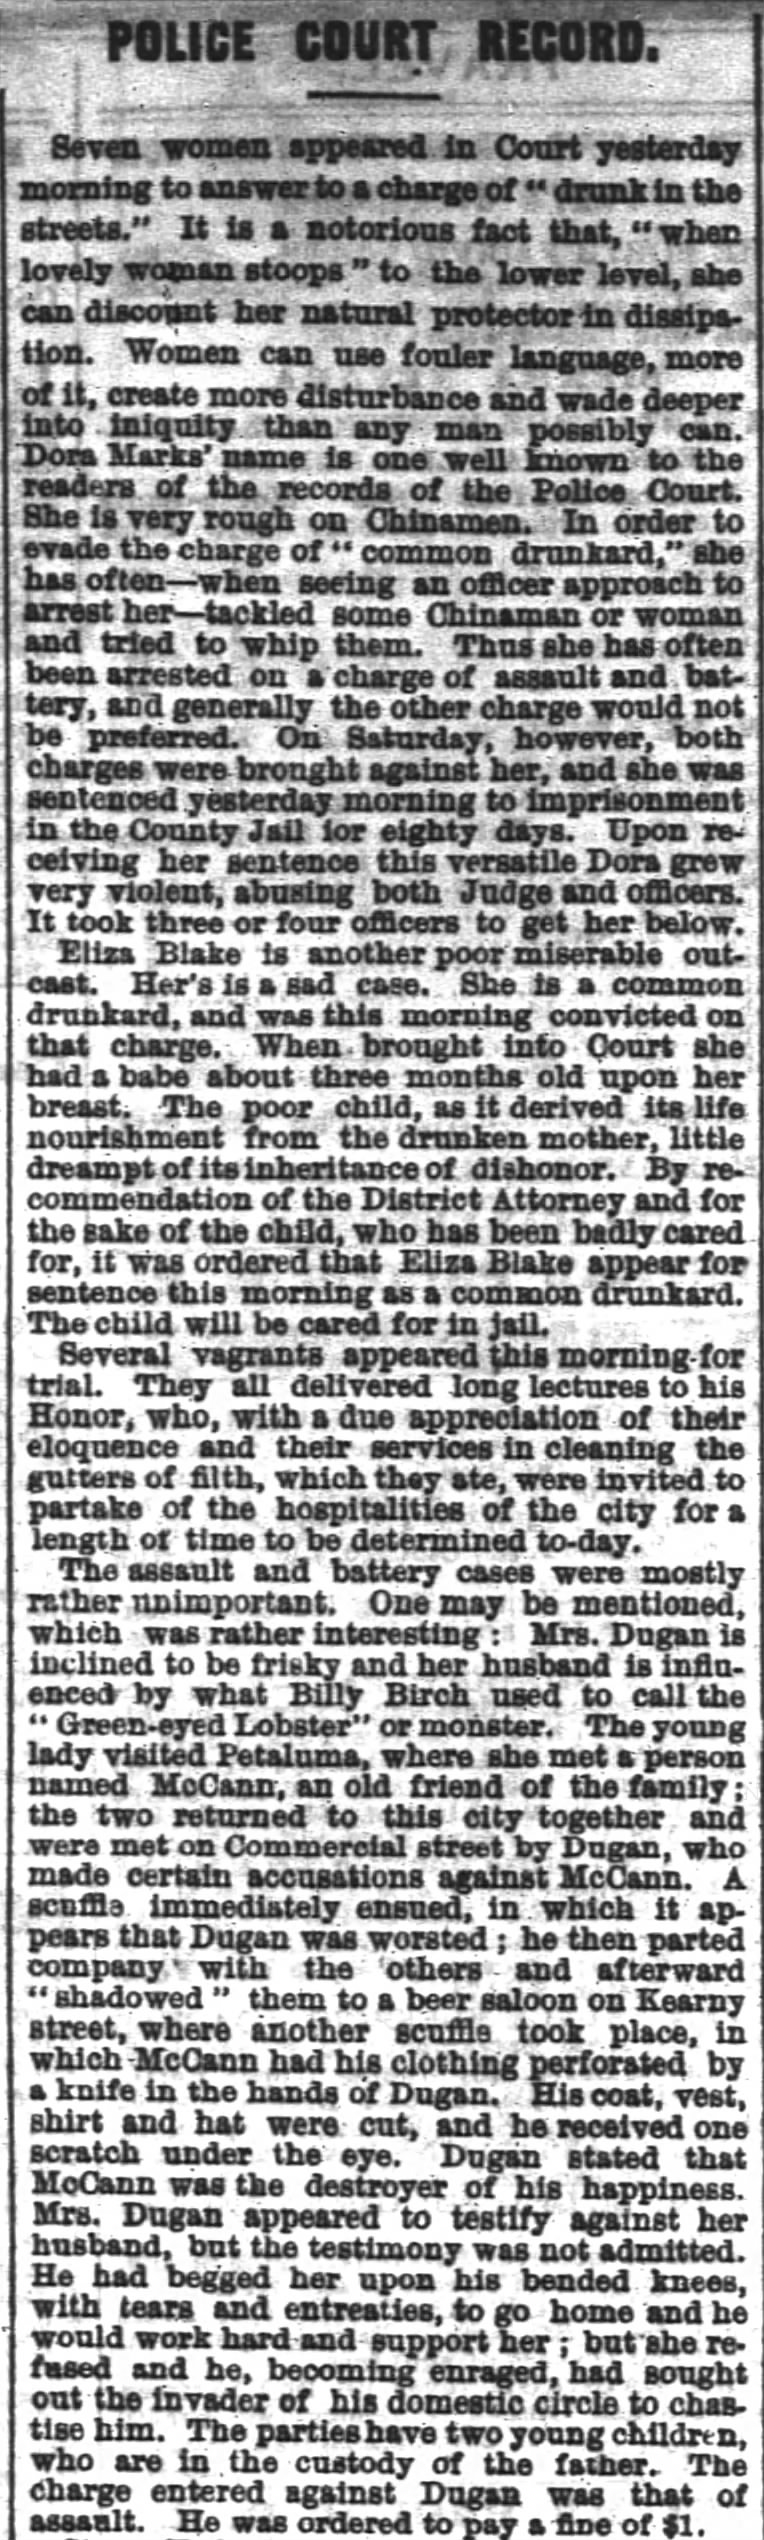 Description of Drunk Women - October 5, 1869 - SF Chronicle